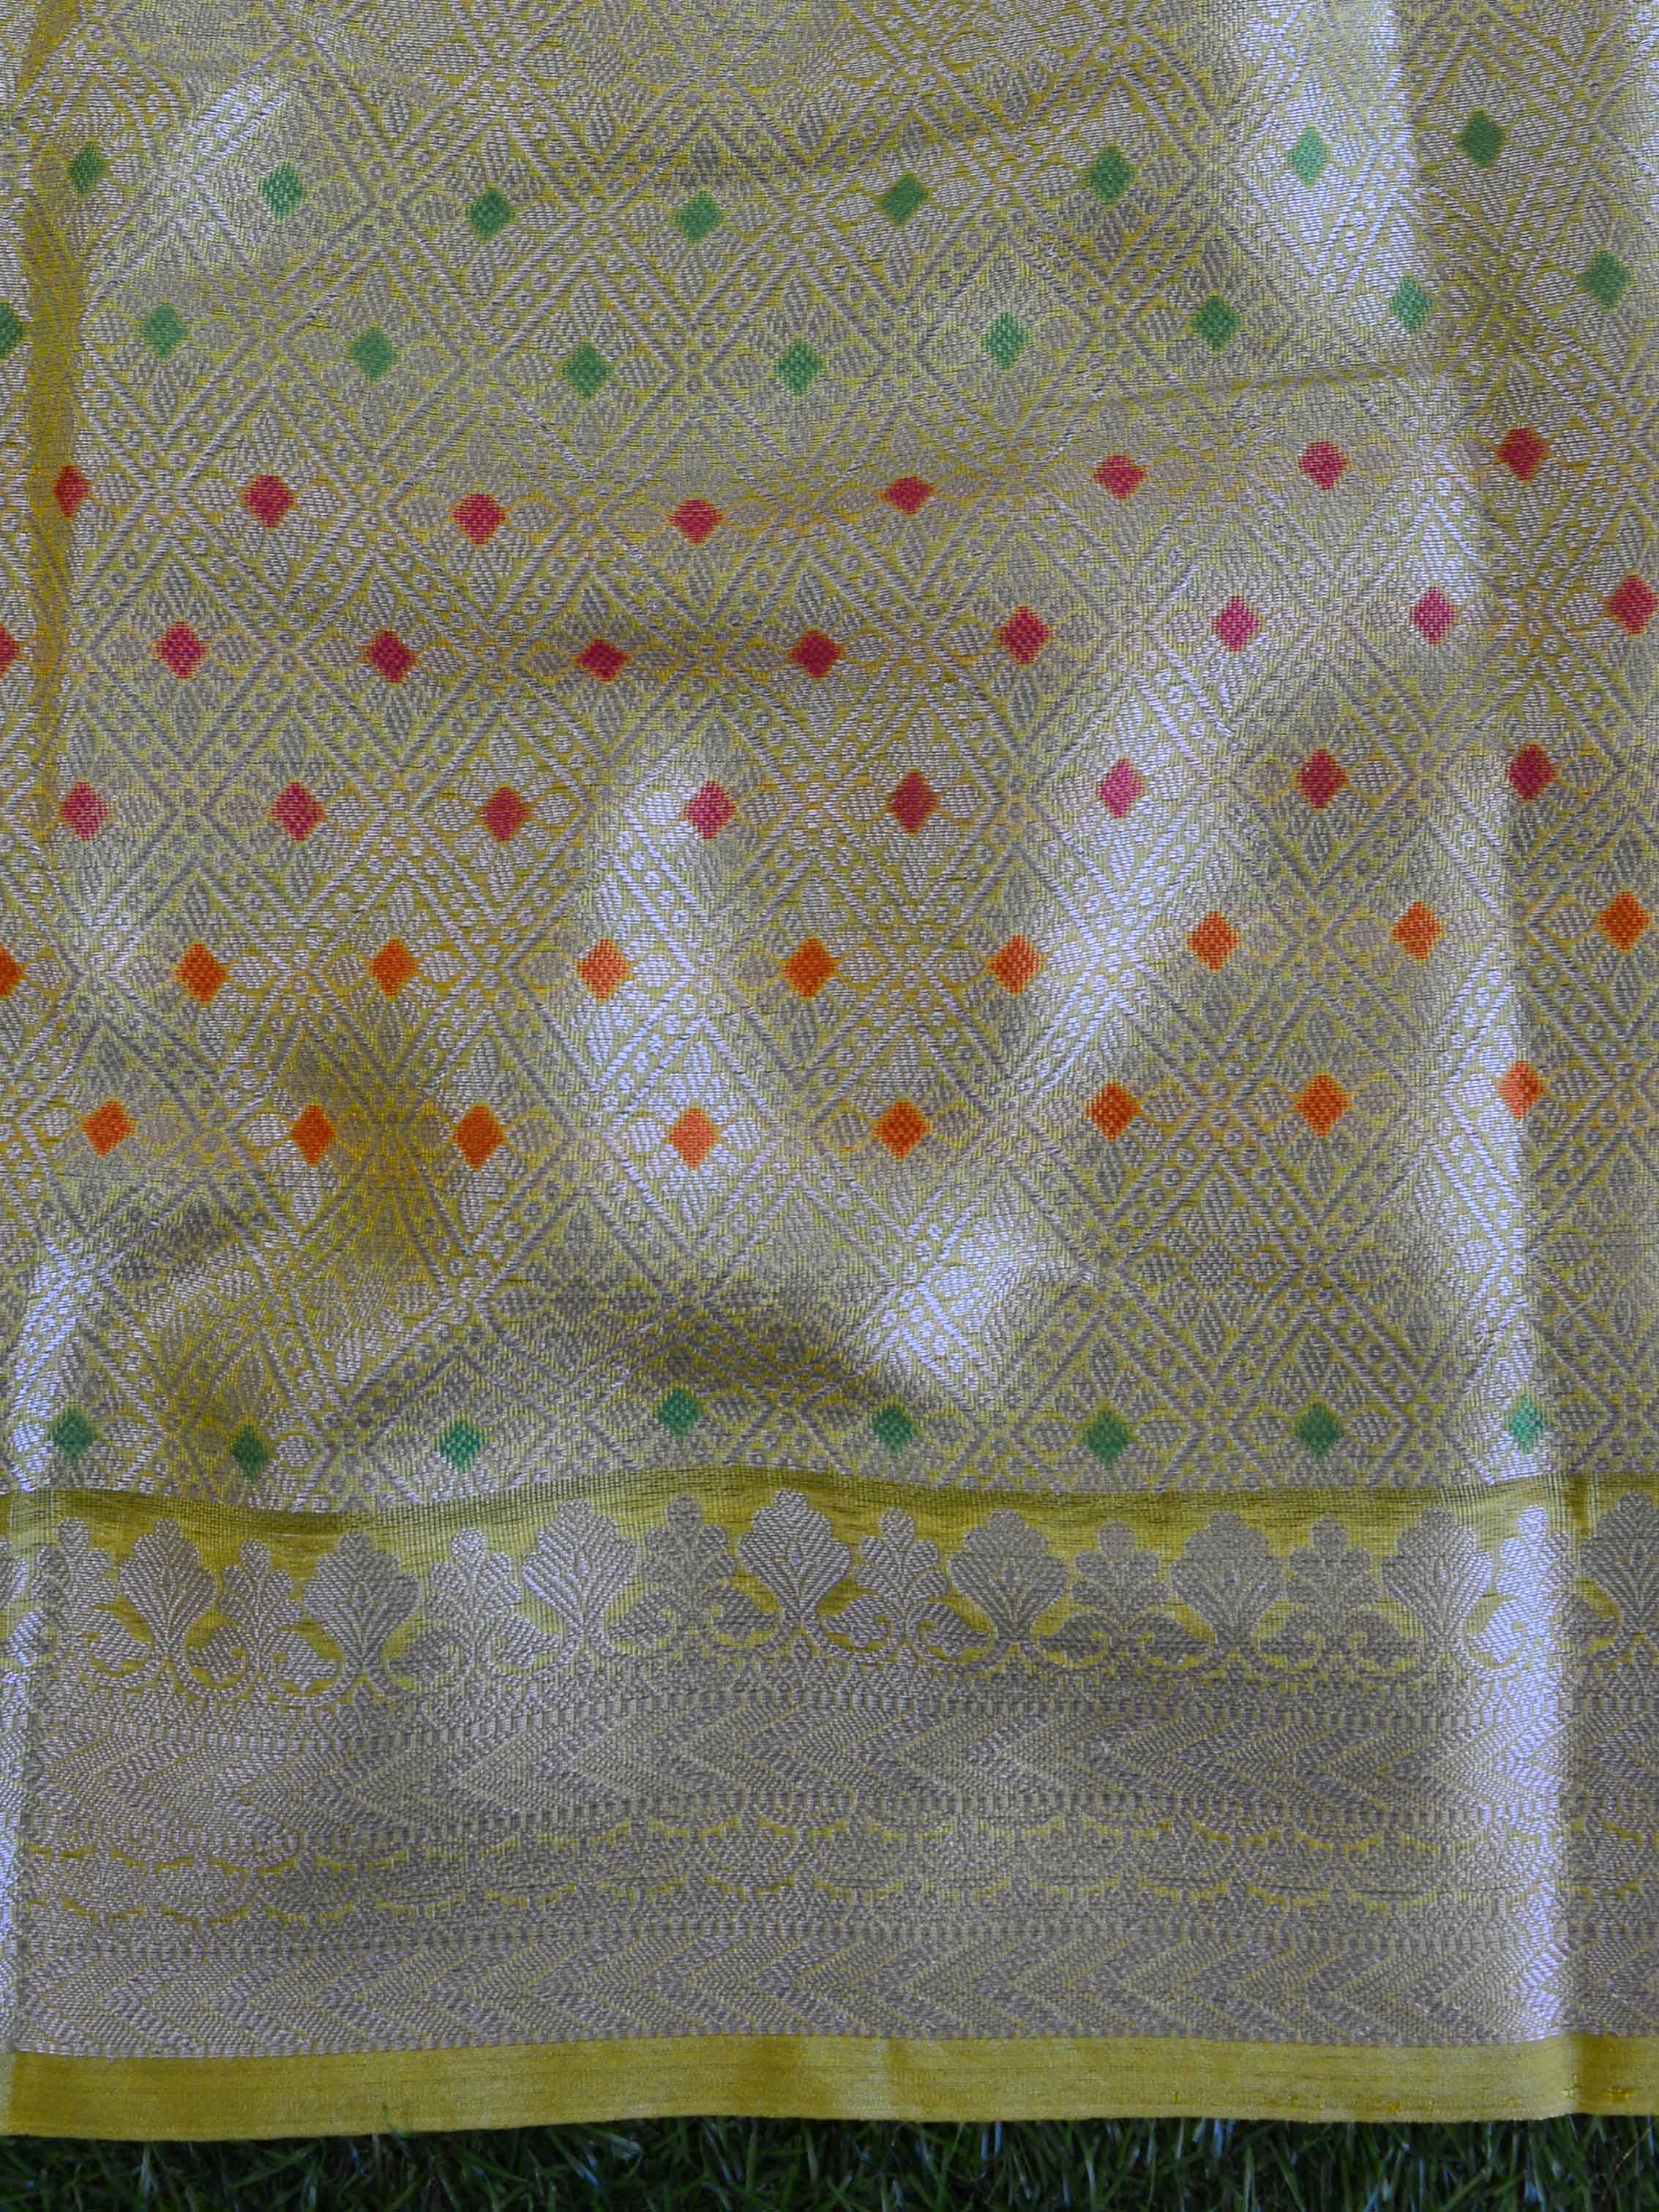 Handwoven Semi Silk Saree With Jaal Design & Silver Zari Border-Yellow